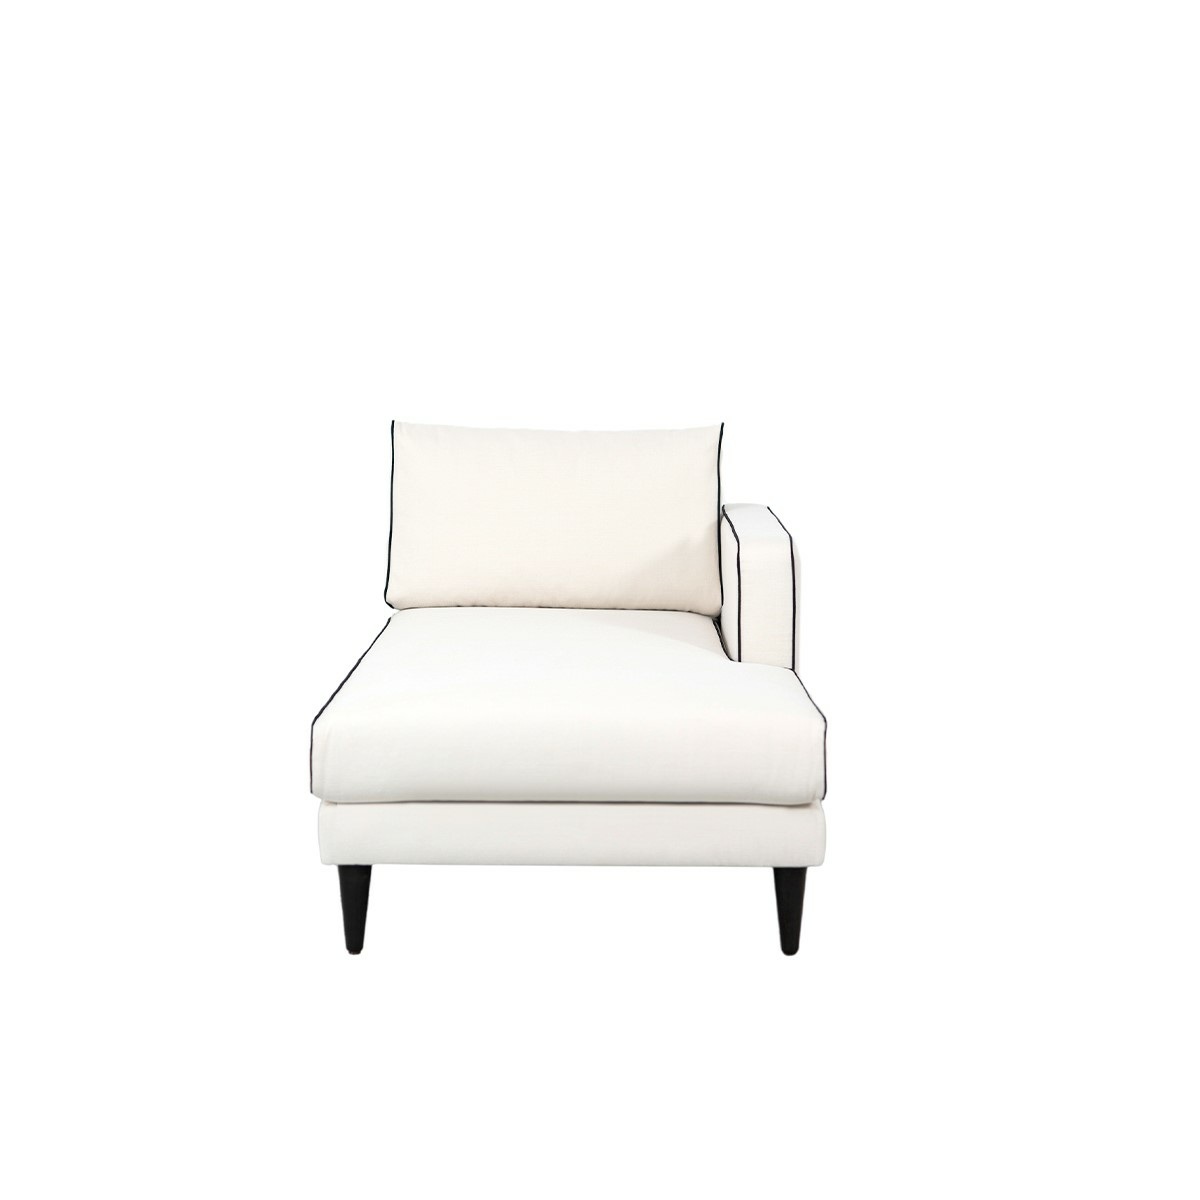 Noa sofa - Right armrest, Different Sizes - Cotton - image 2